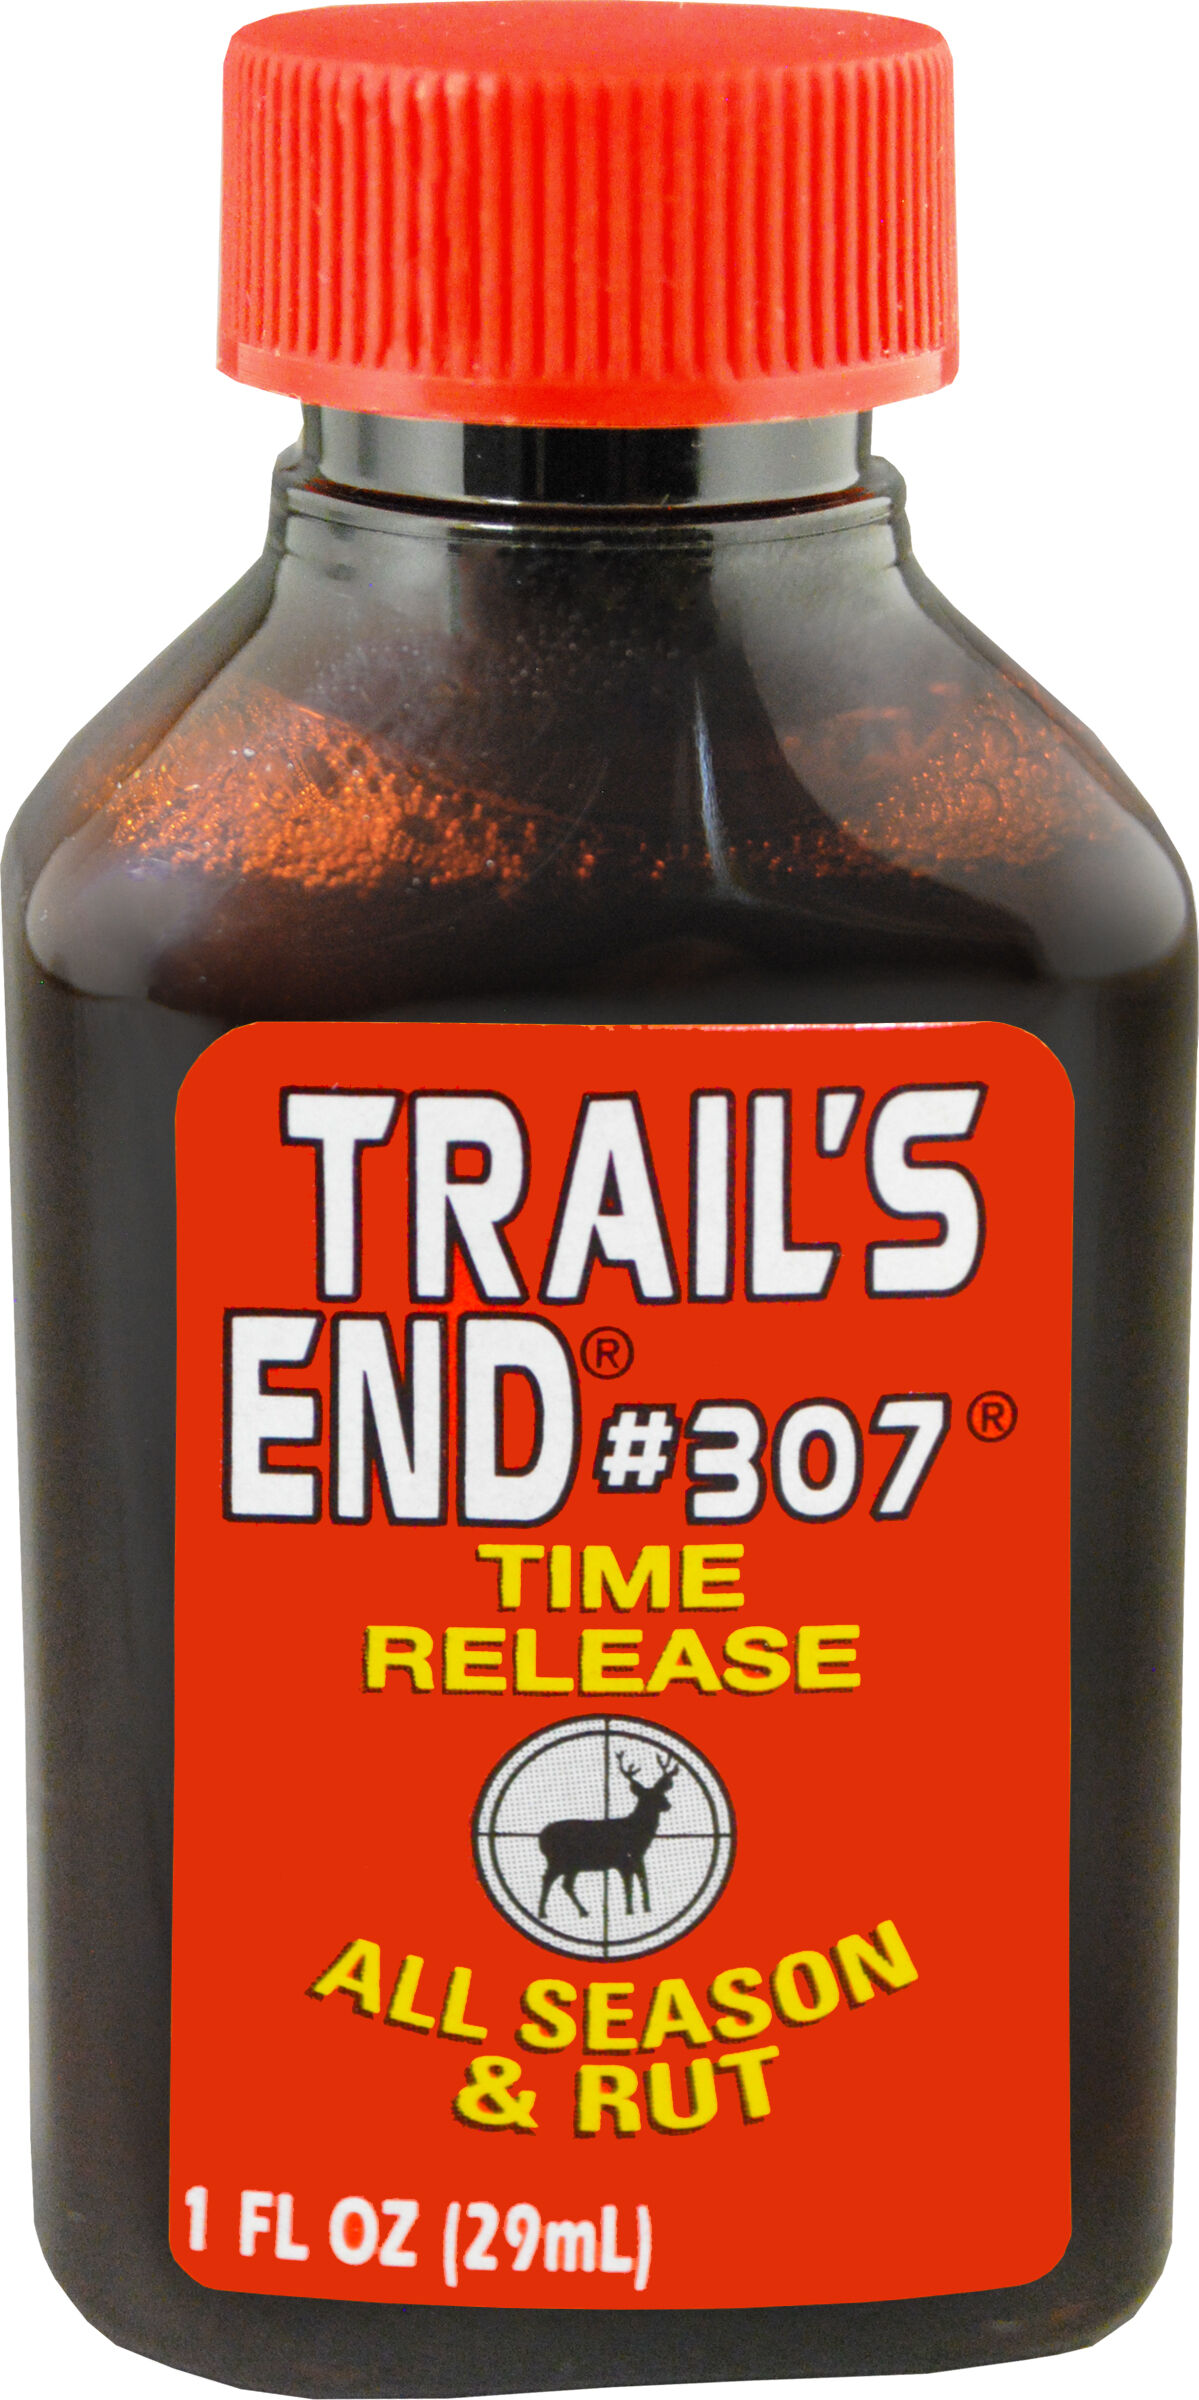 Trails End #307